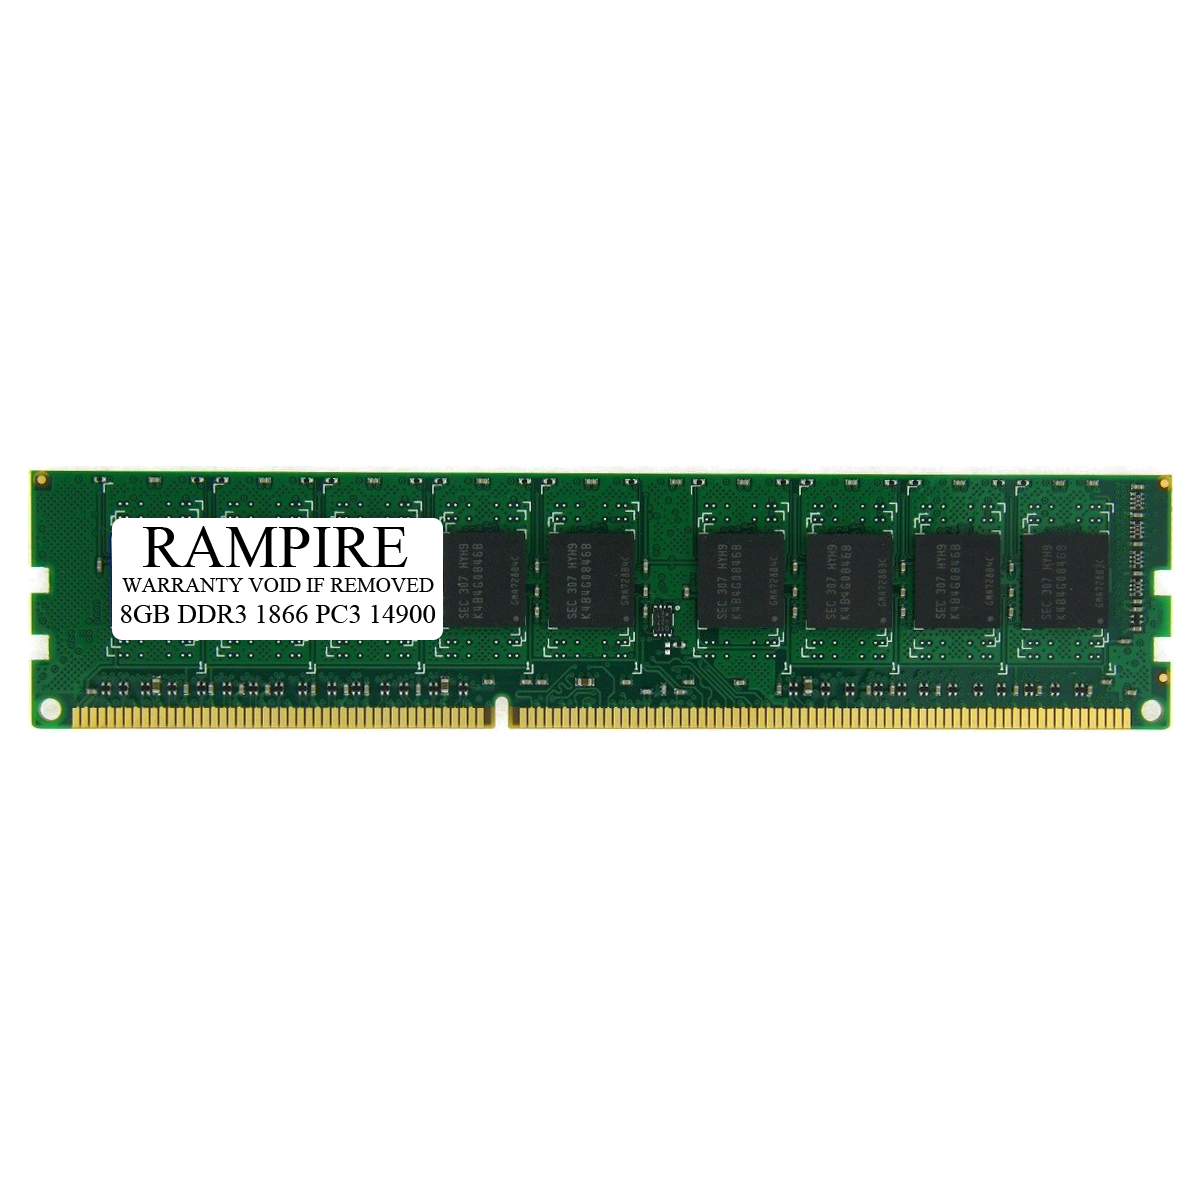 RAMPIRE 8GB DDR3 1866 (PC3 14900) 240-Pin SDRAM 2Rx4 Standard Profile 1.5V ECC Unregistered Server Memory